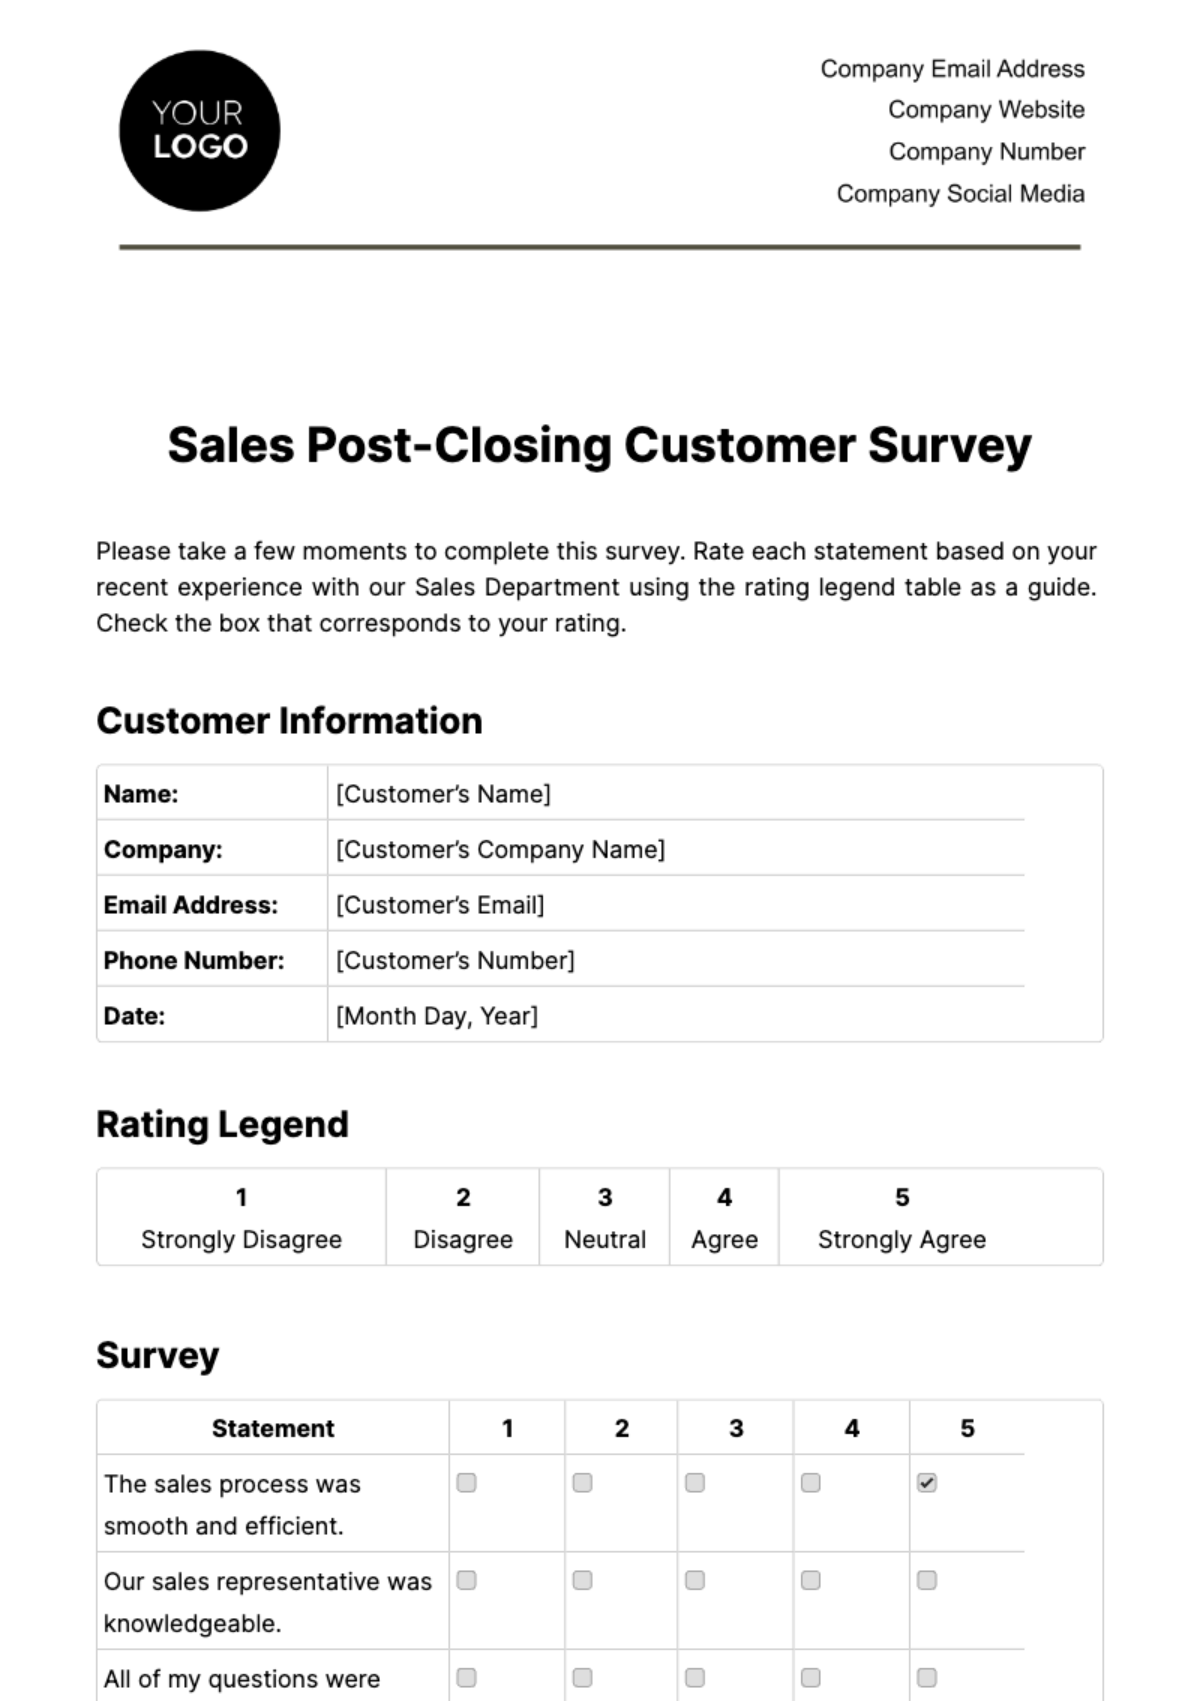 Sales Post-Closing Customer Survey Template